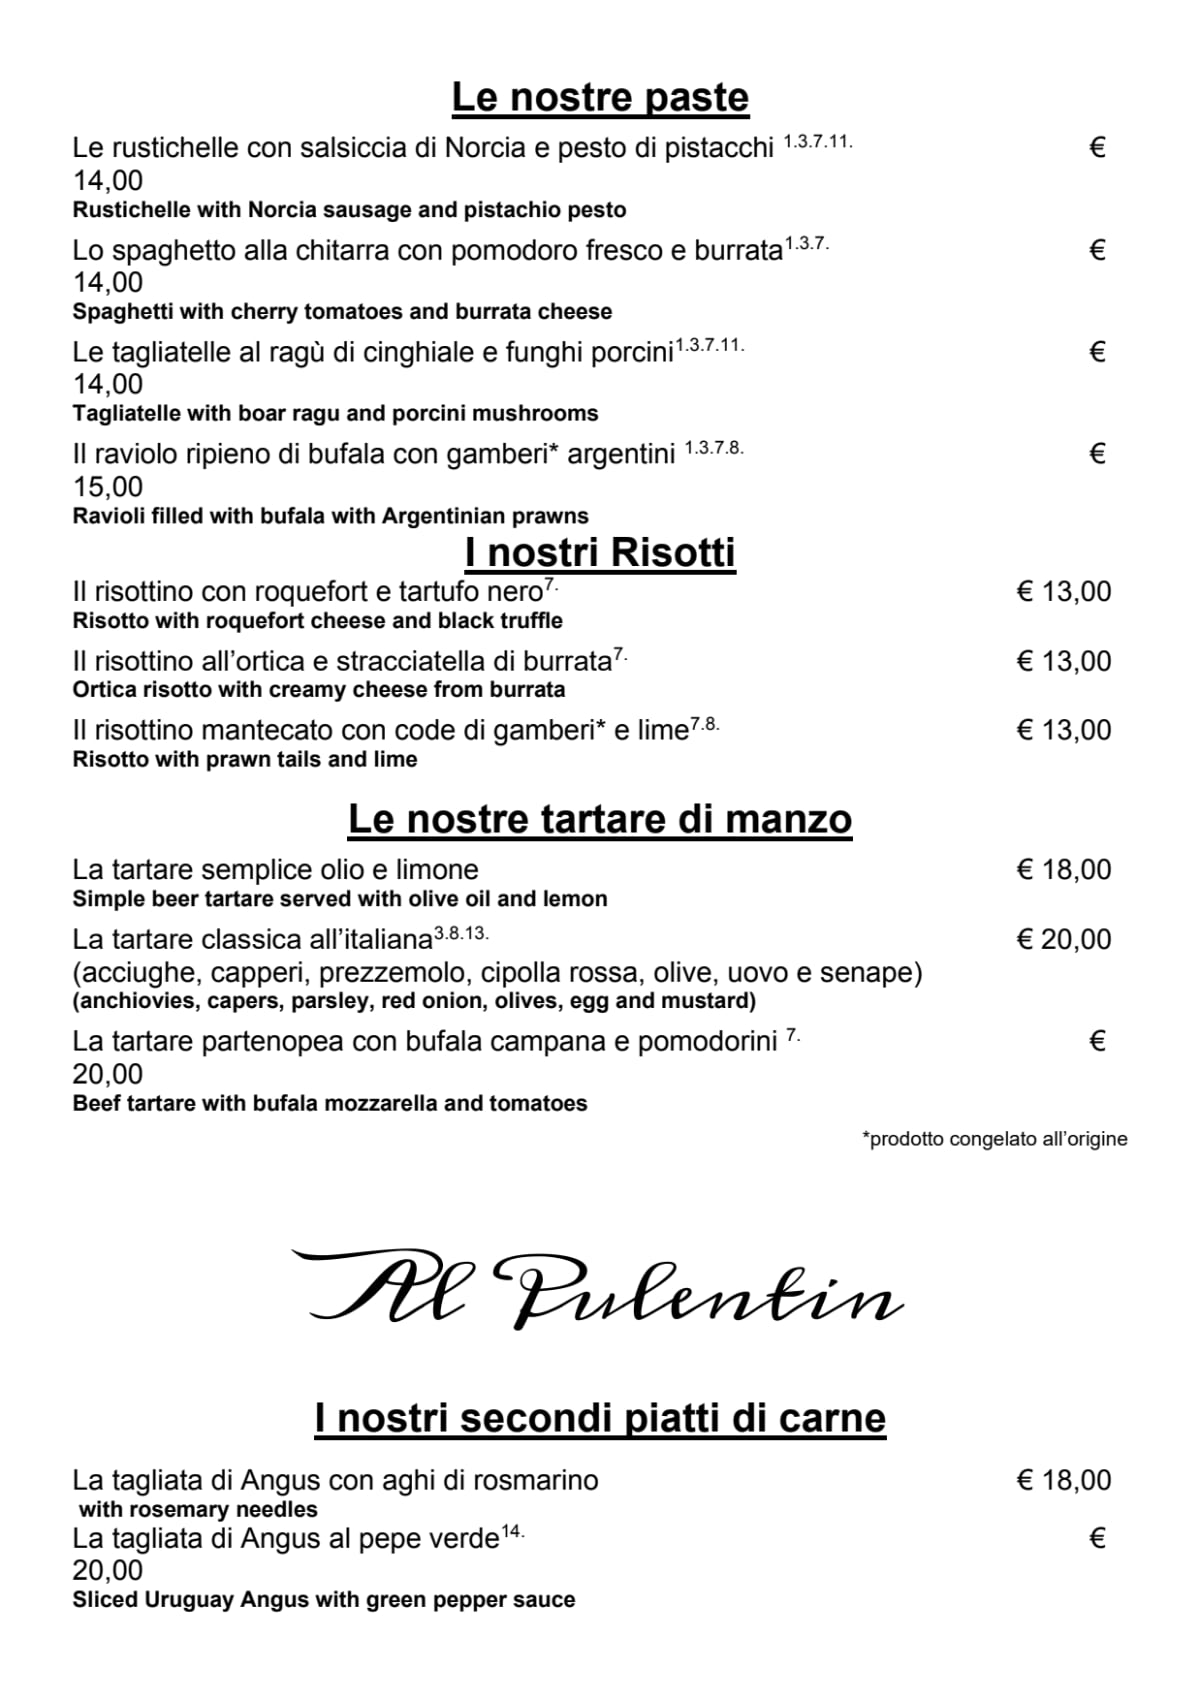 Al Pulentin menu